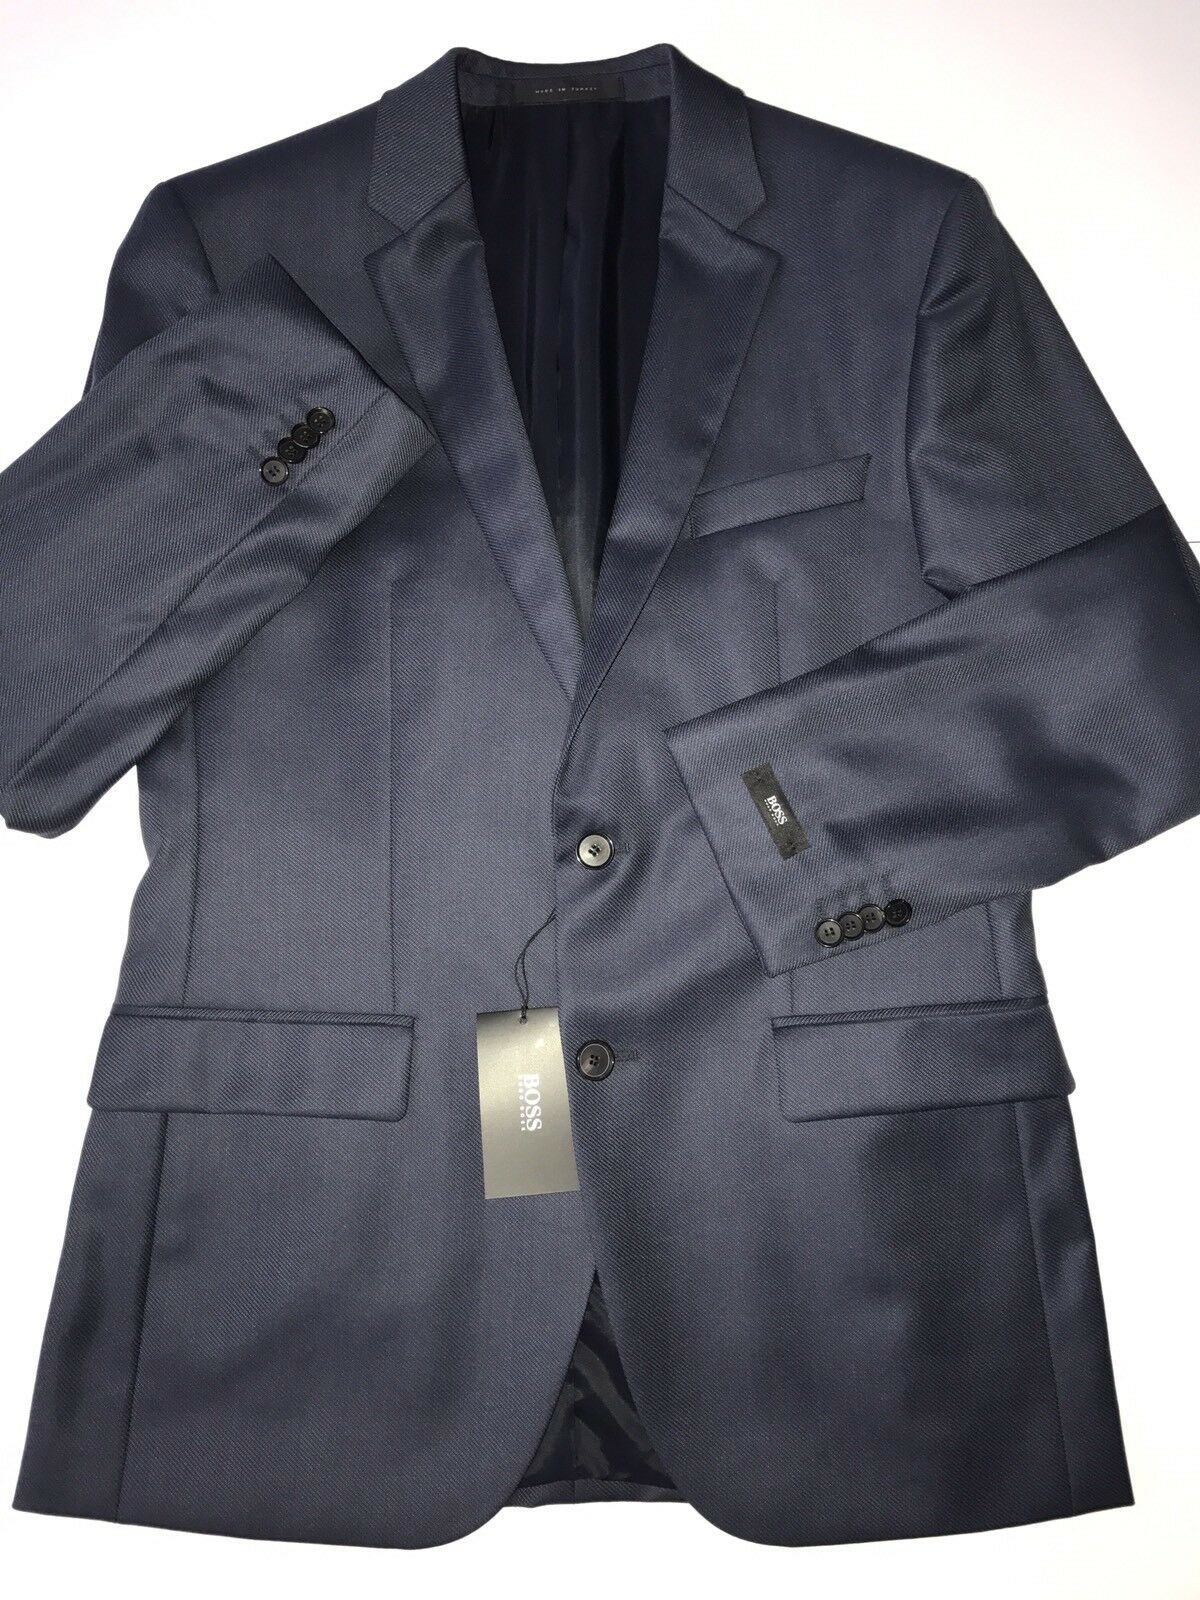 NWT $695 Boss Hugo Boss Grand Silk / Wool Navy Sport Coat Jacket 38R US